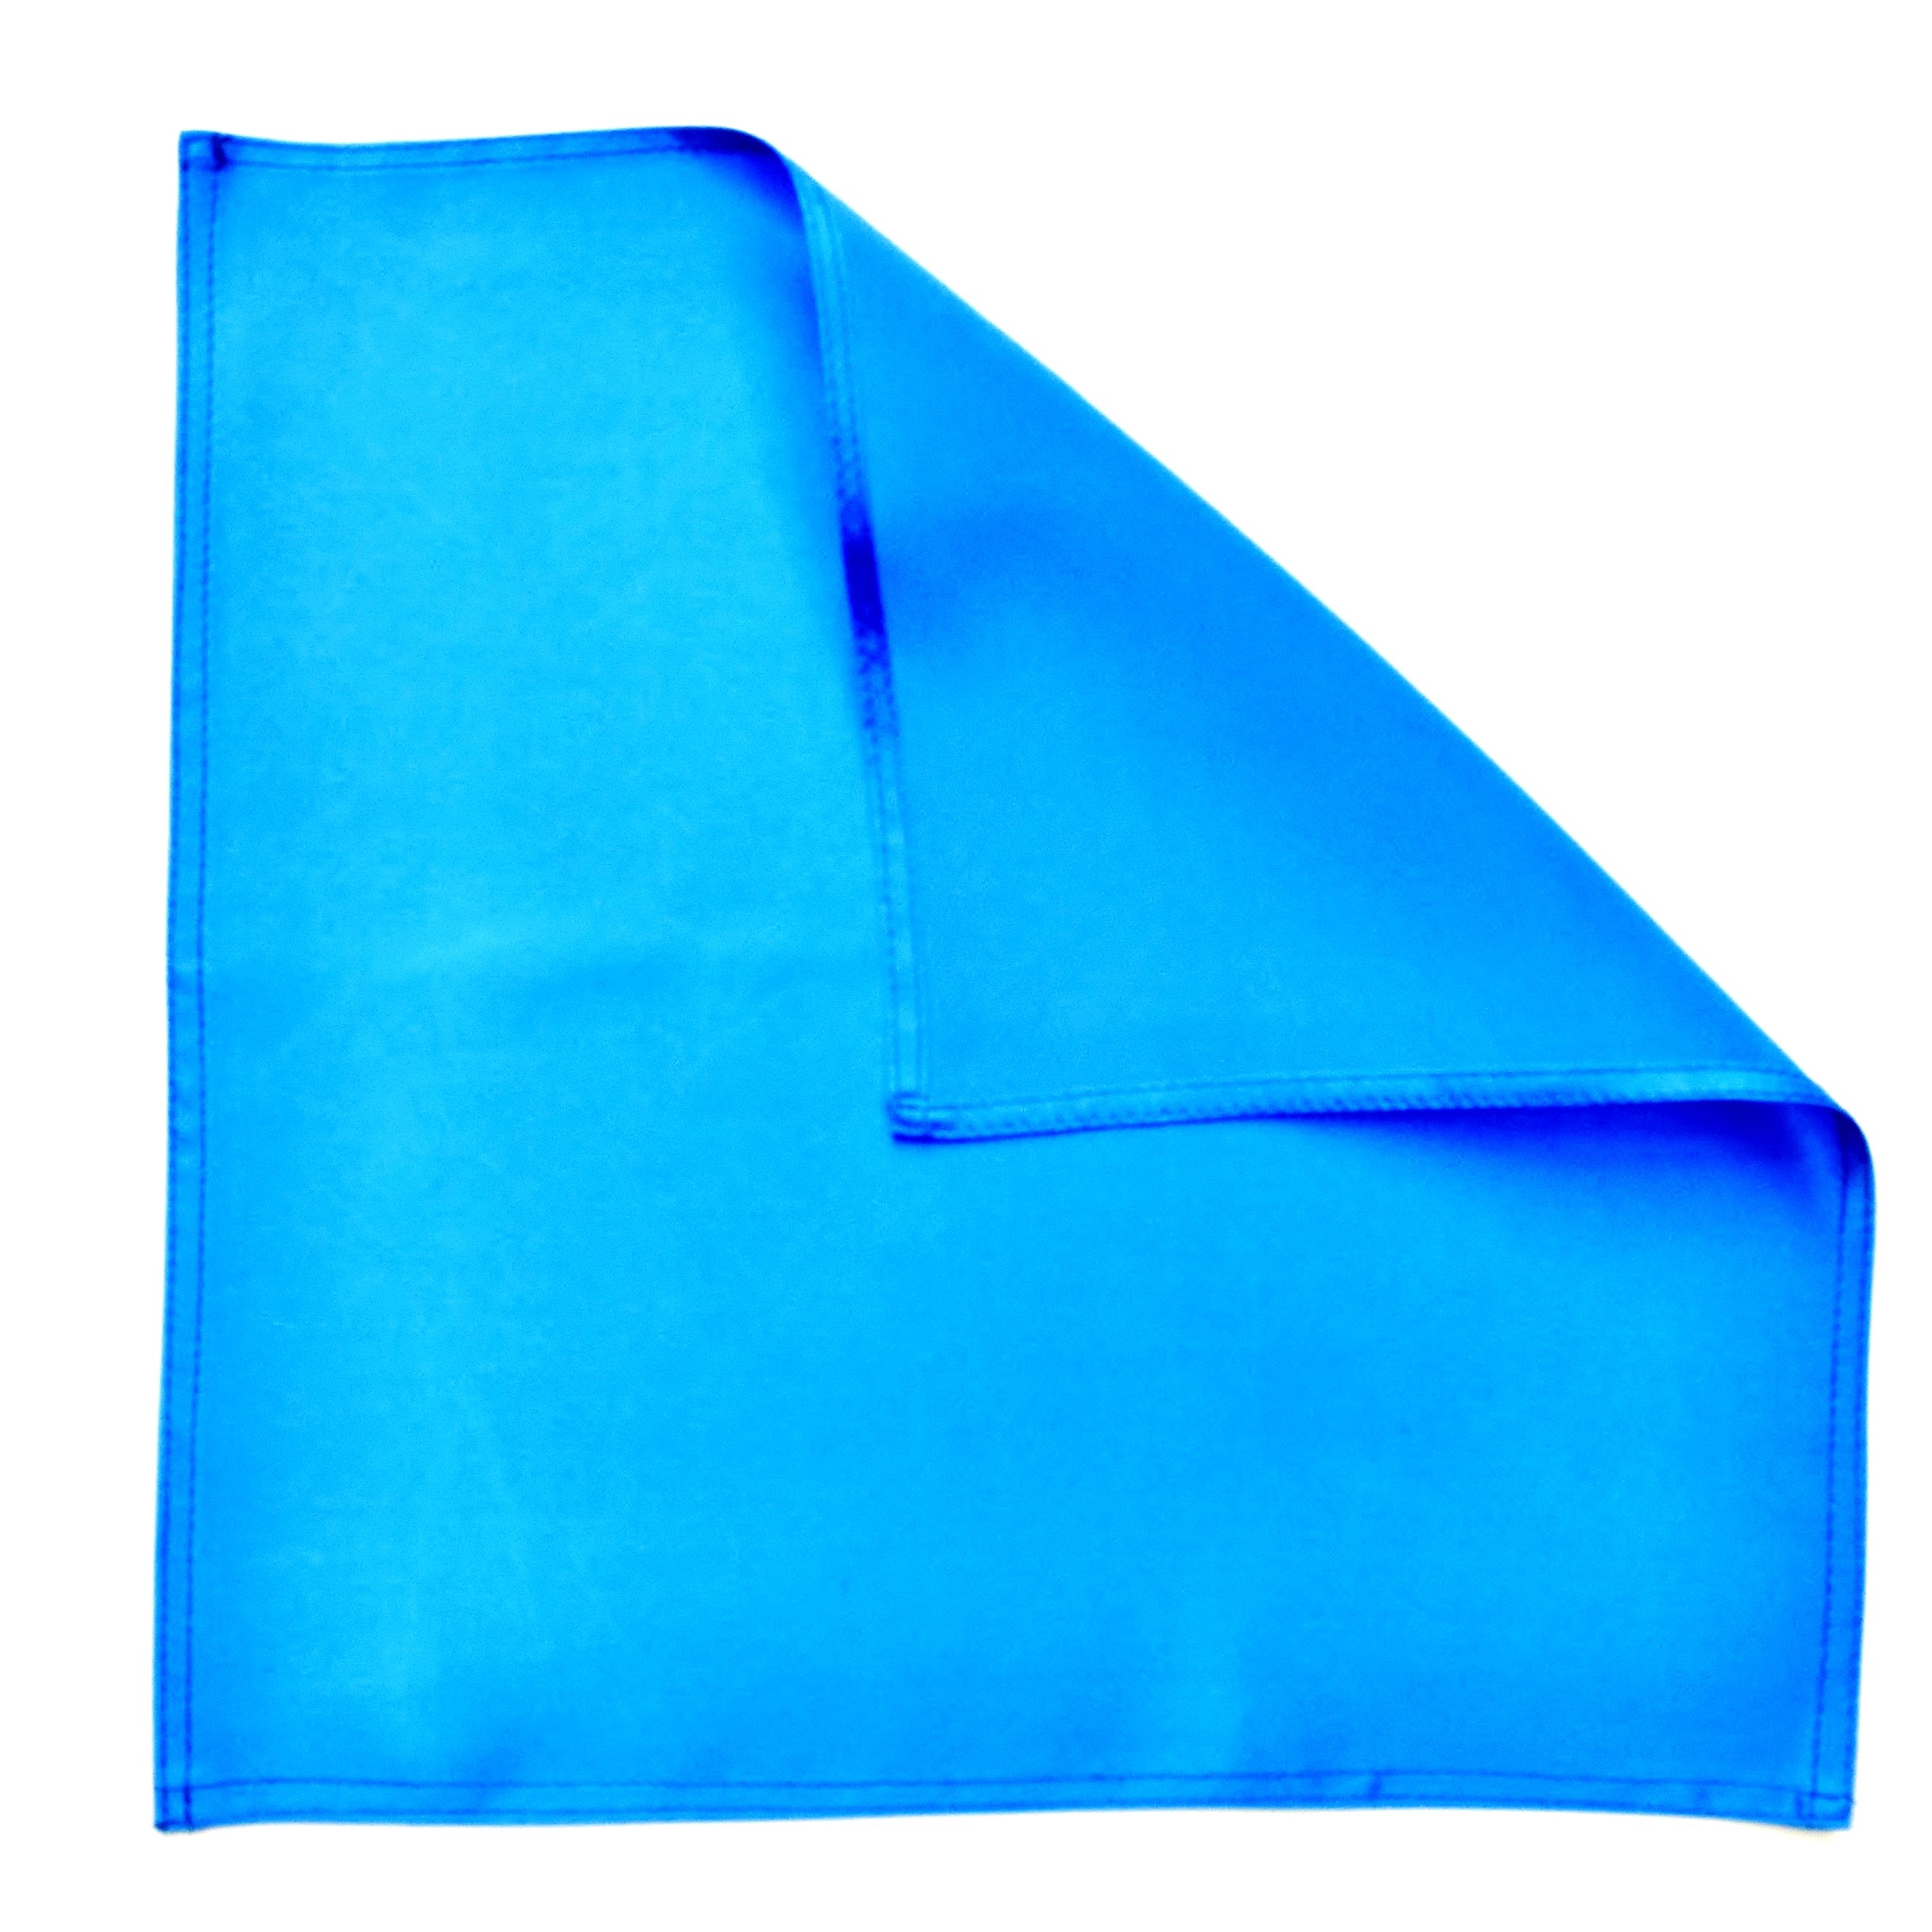 Royal blue silk satin pocket square men's fashion handmade by Lynne Kiel